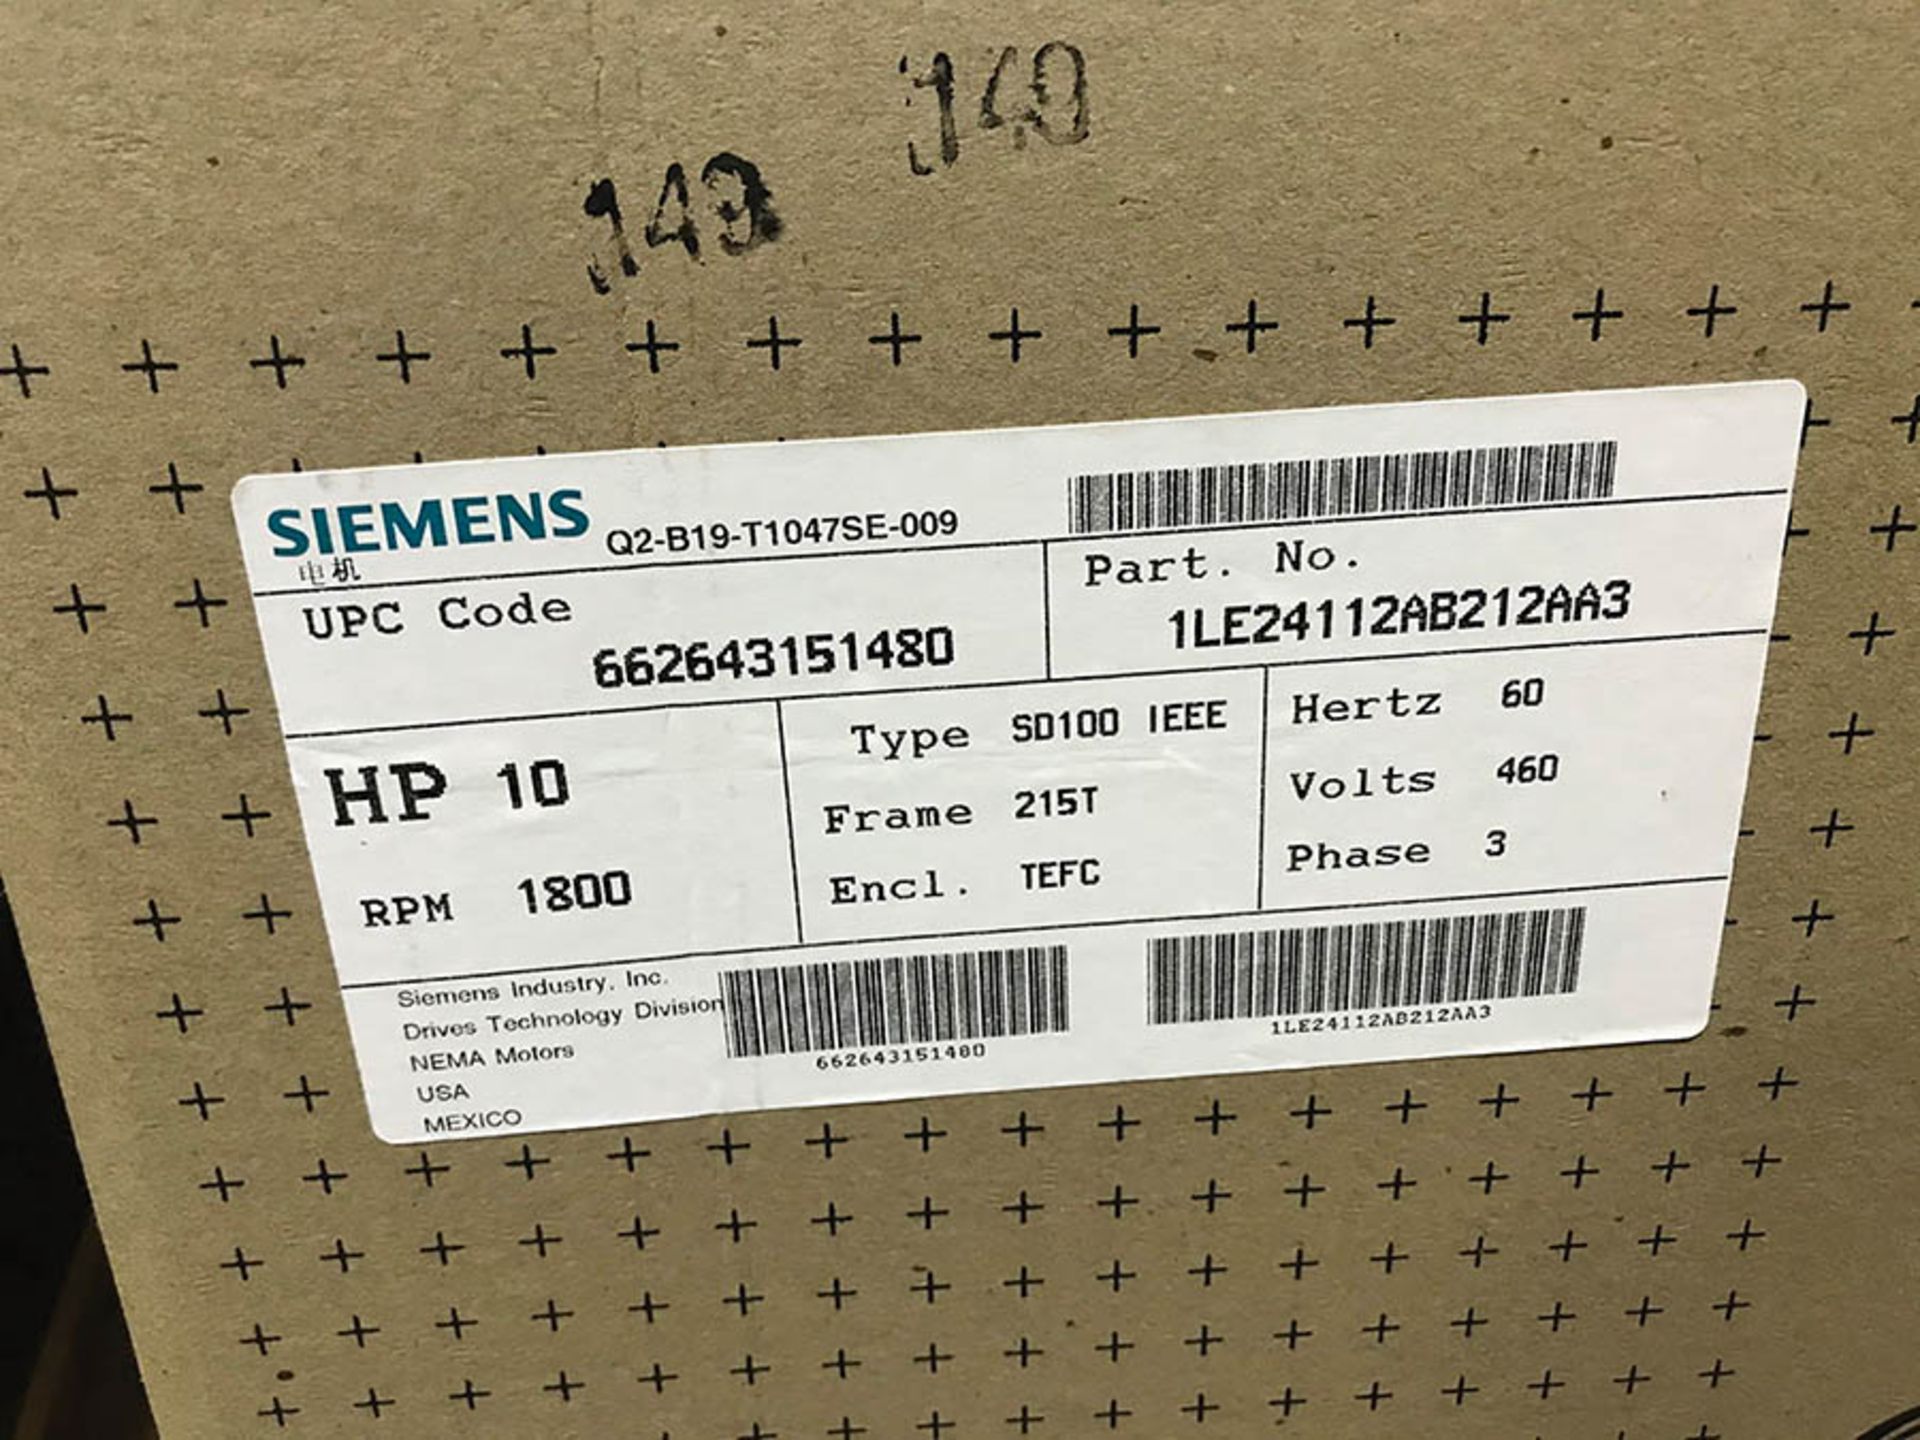 SIEMENS 10 HP MOTOR, MODEL SD100 IEEE, 1800 RPM, 215T FRAME, 460V, 3PH, (NEW) - Image 2 of 2